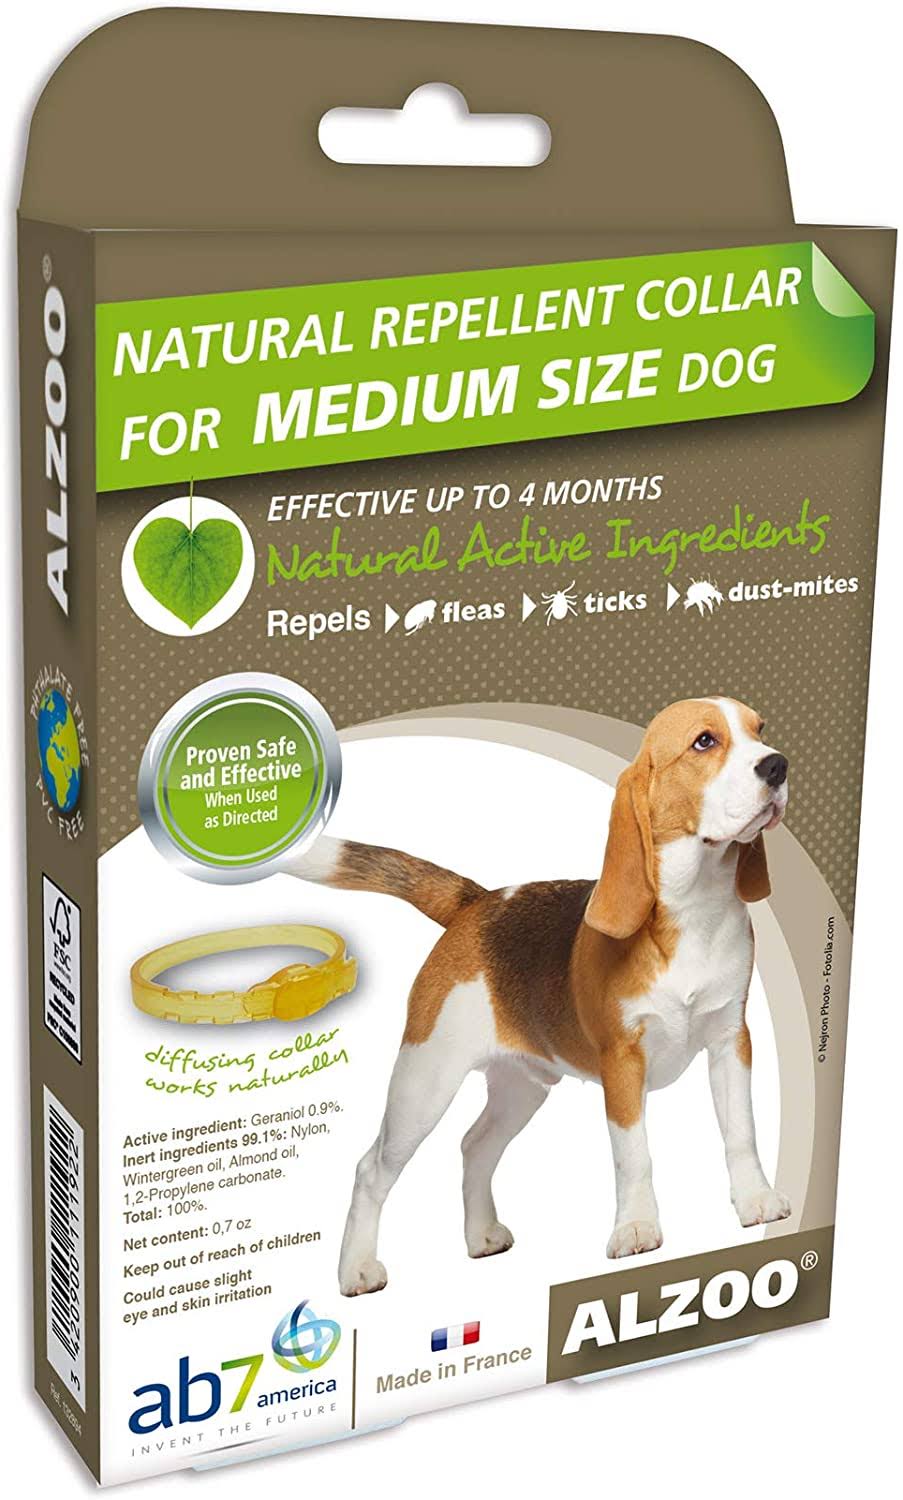 Alzoo Natural Repellent Flea & Tick Collar for Dogs